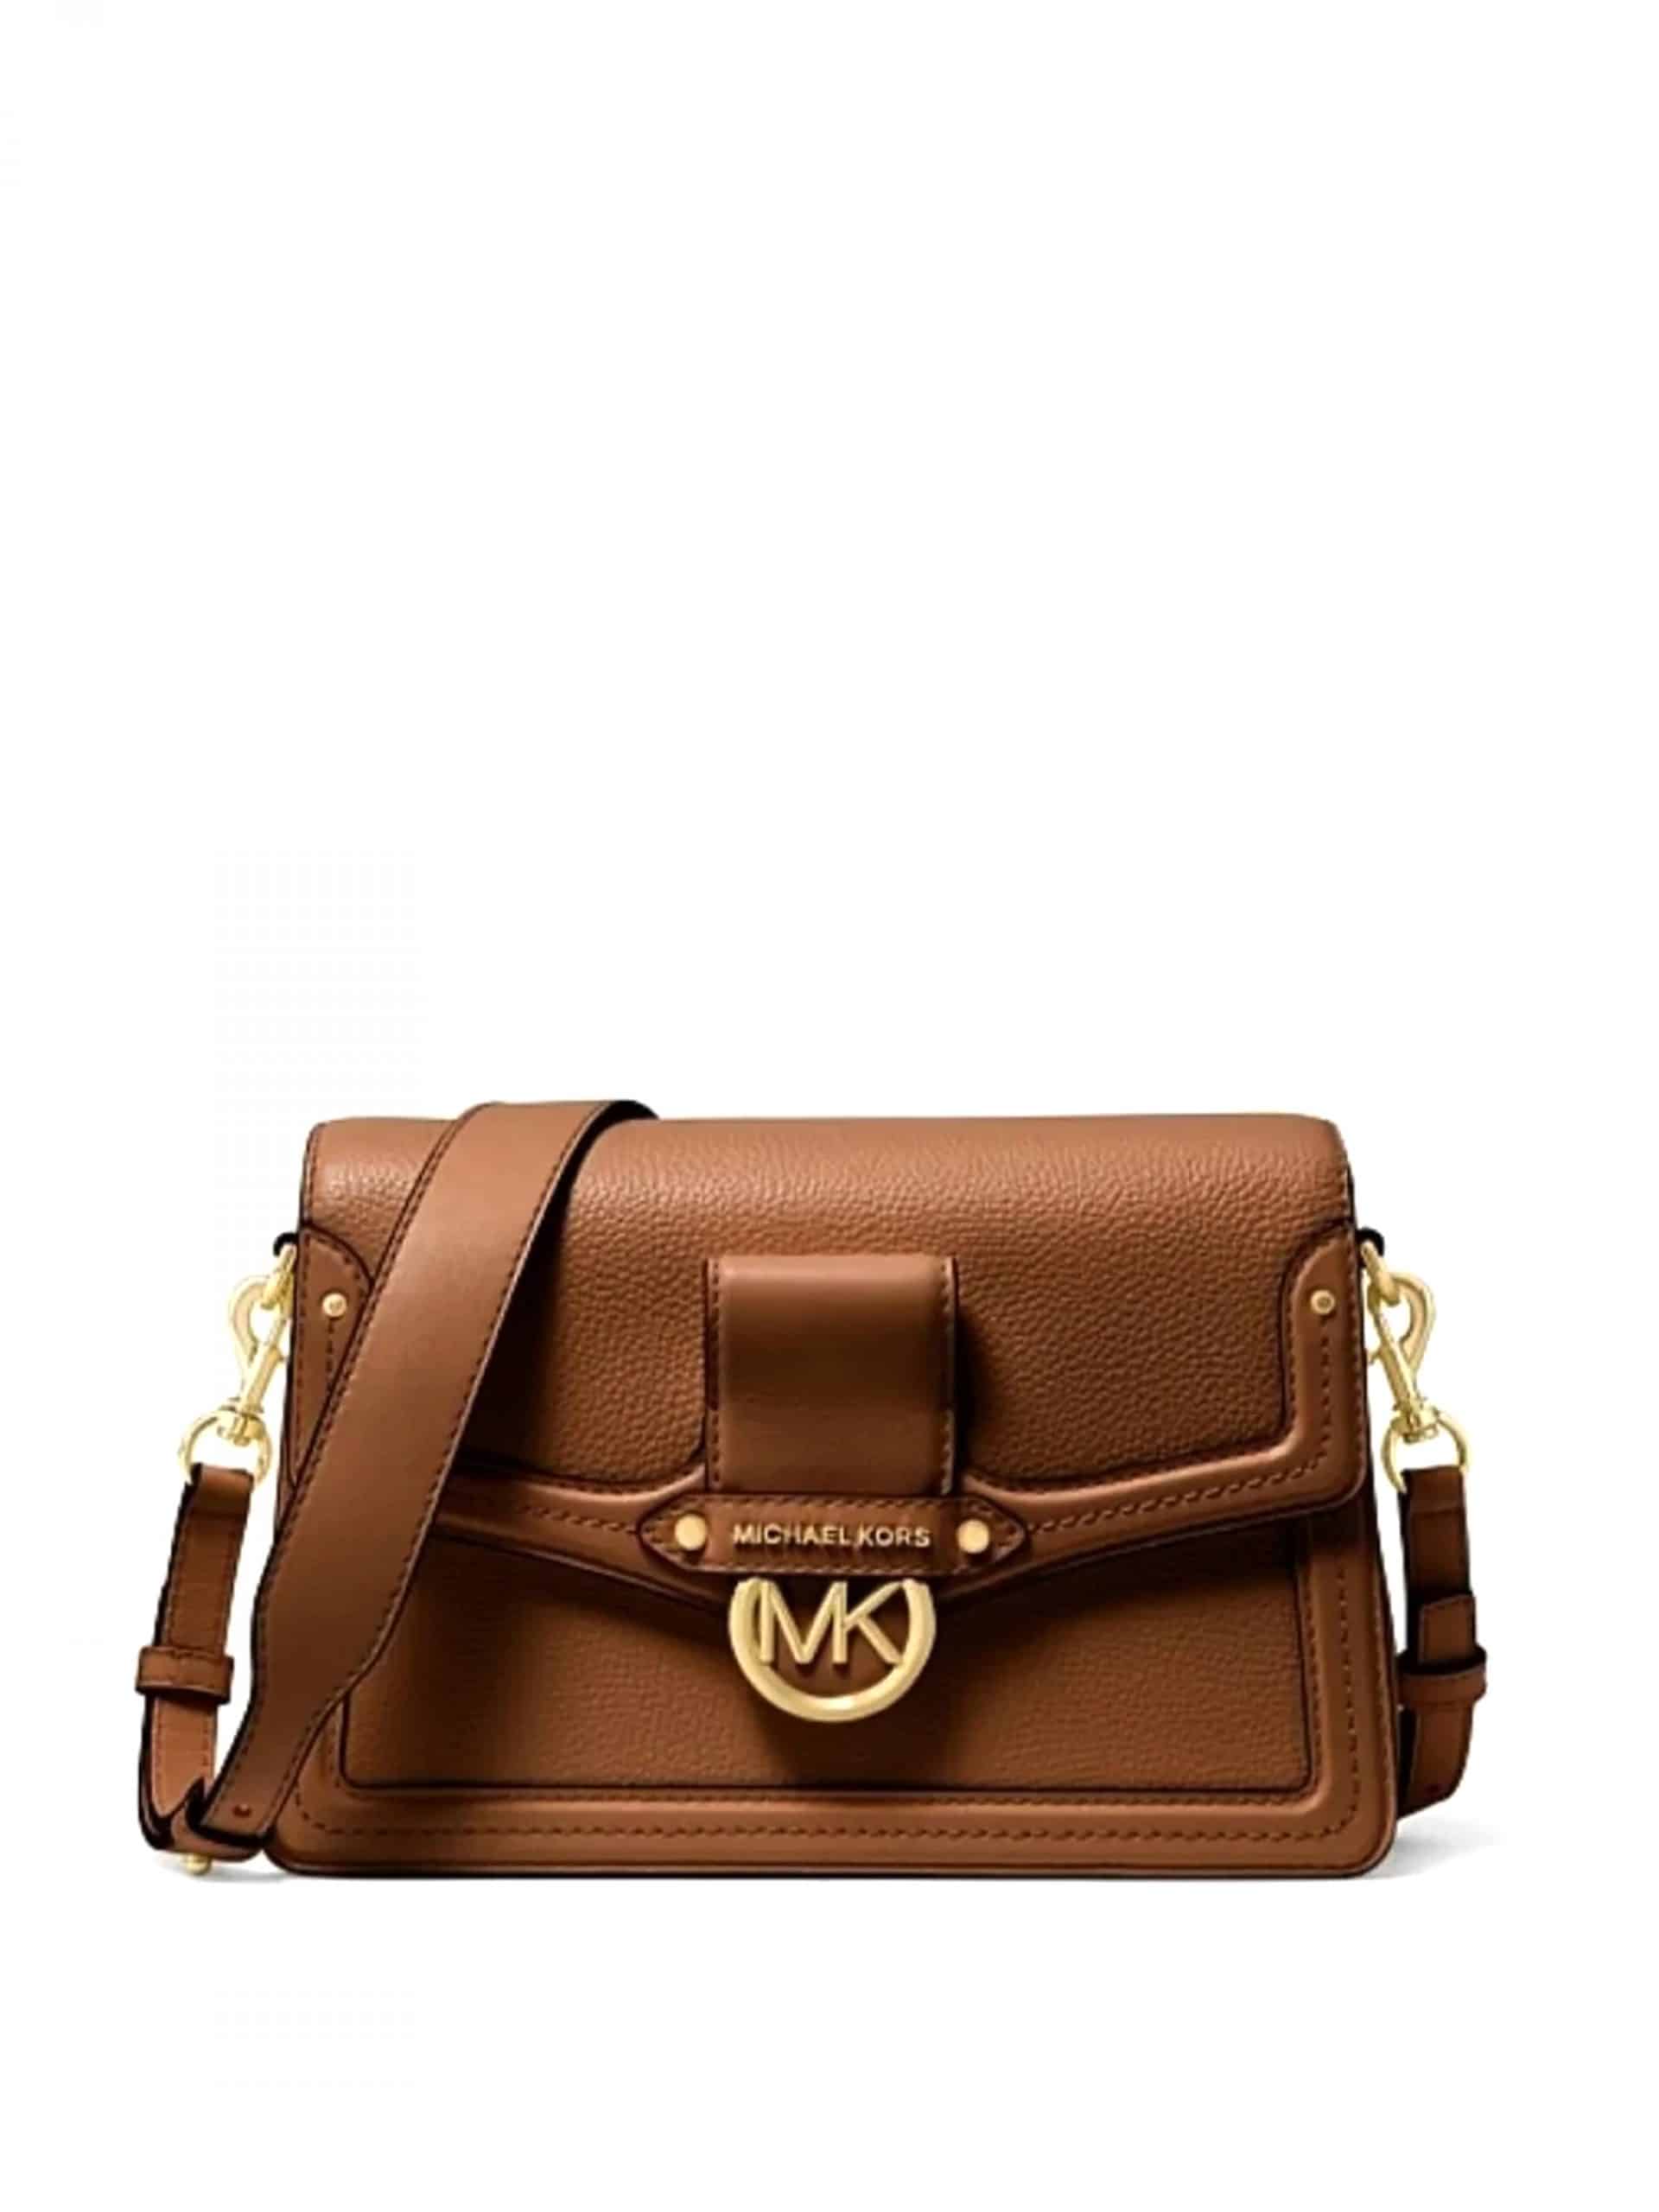 Michael Kors Jessie Medium Shoulder Bag Luggage - Averand